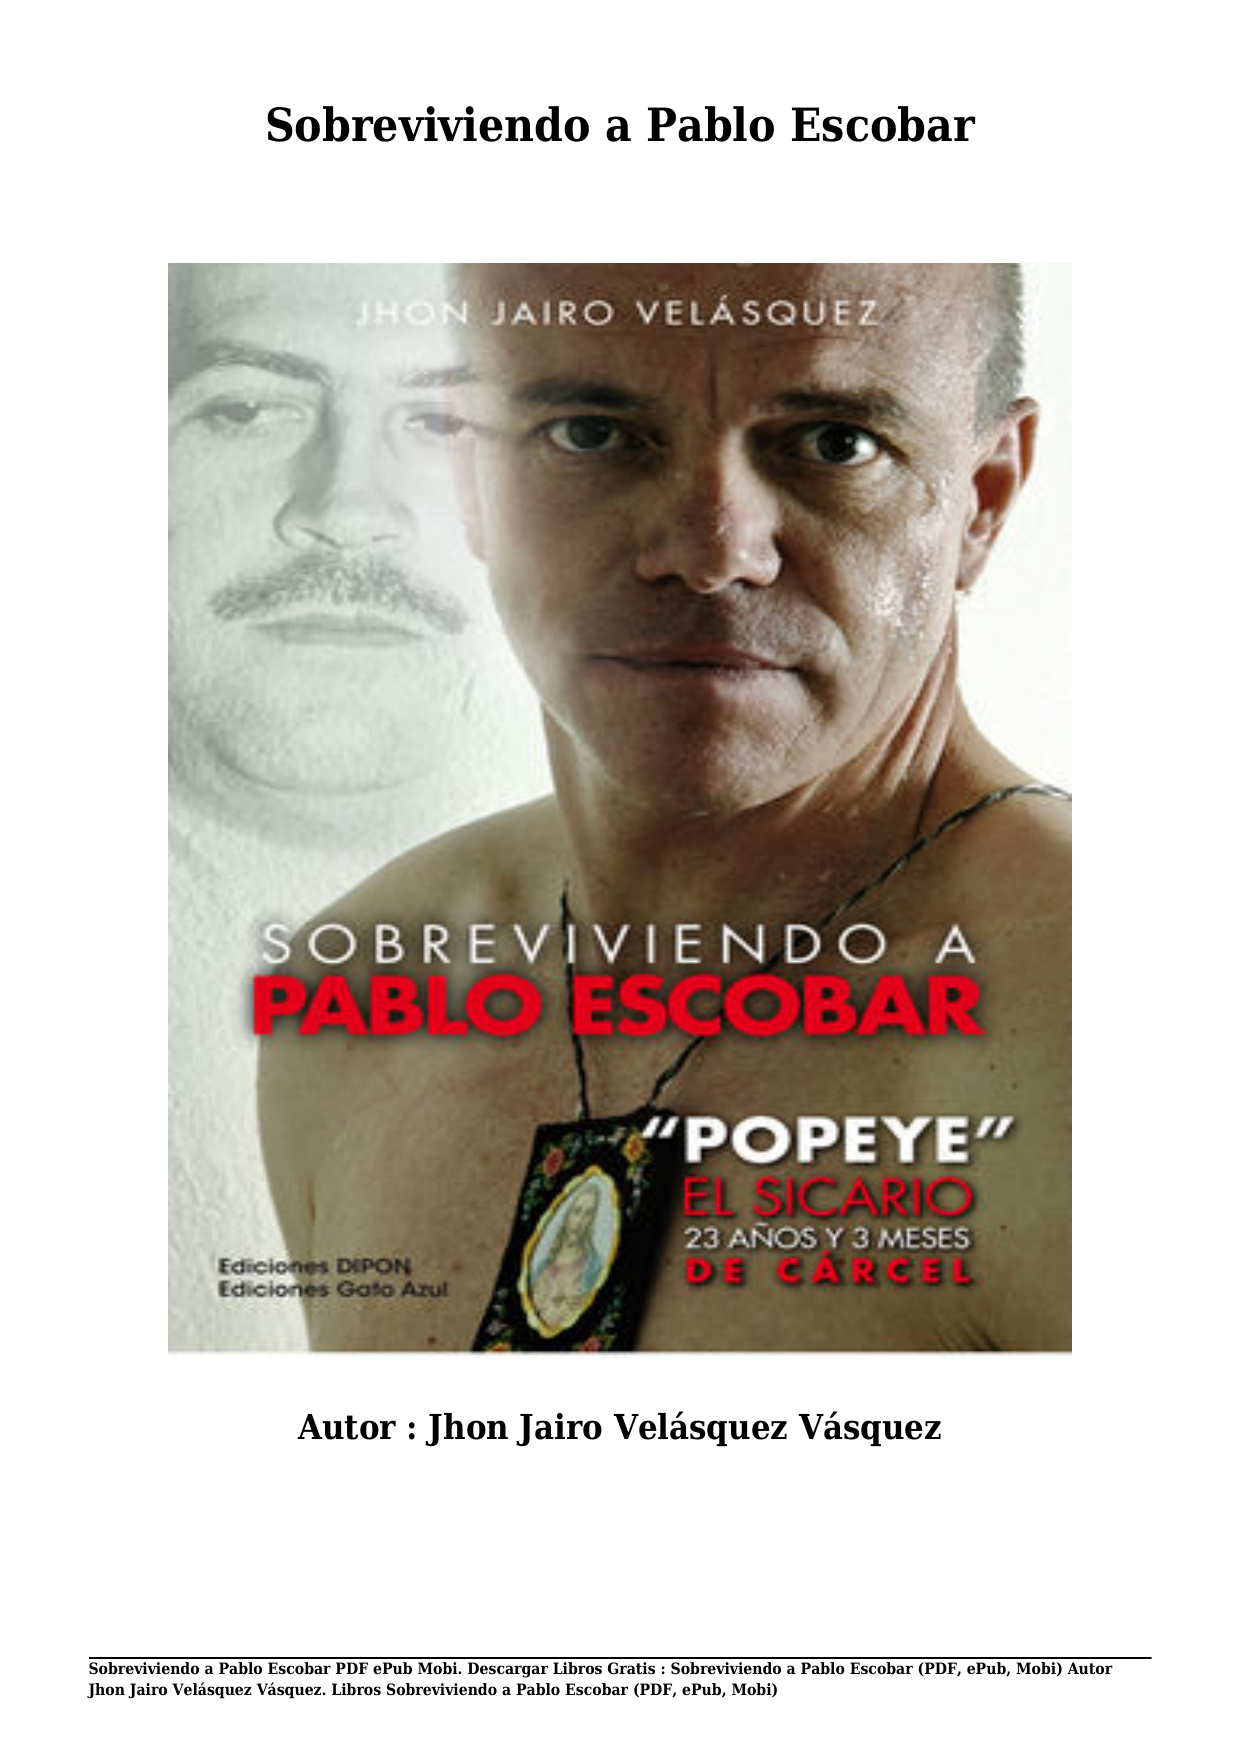  descargar-libros-gratis-sobreviviendo-a-pablo-escobar-pdf -epub-mobi-por-jhon-jairo-velasquez-vasquez